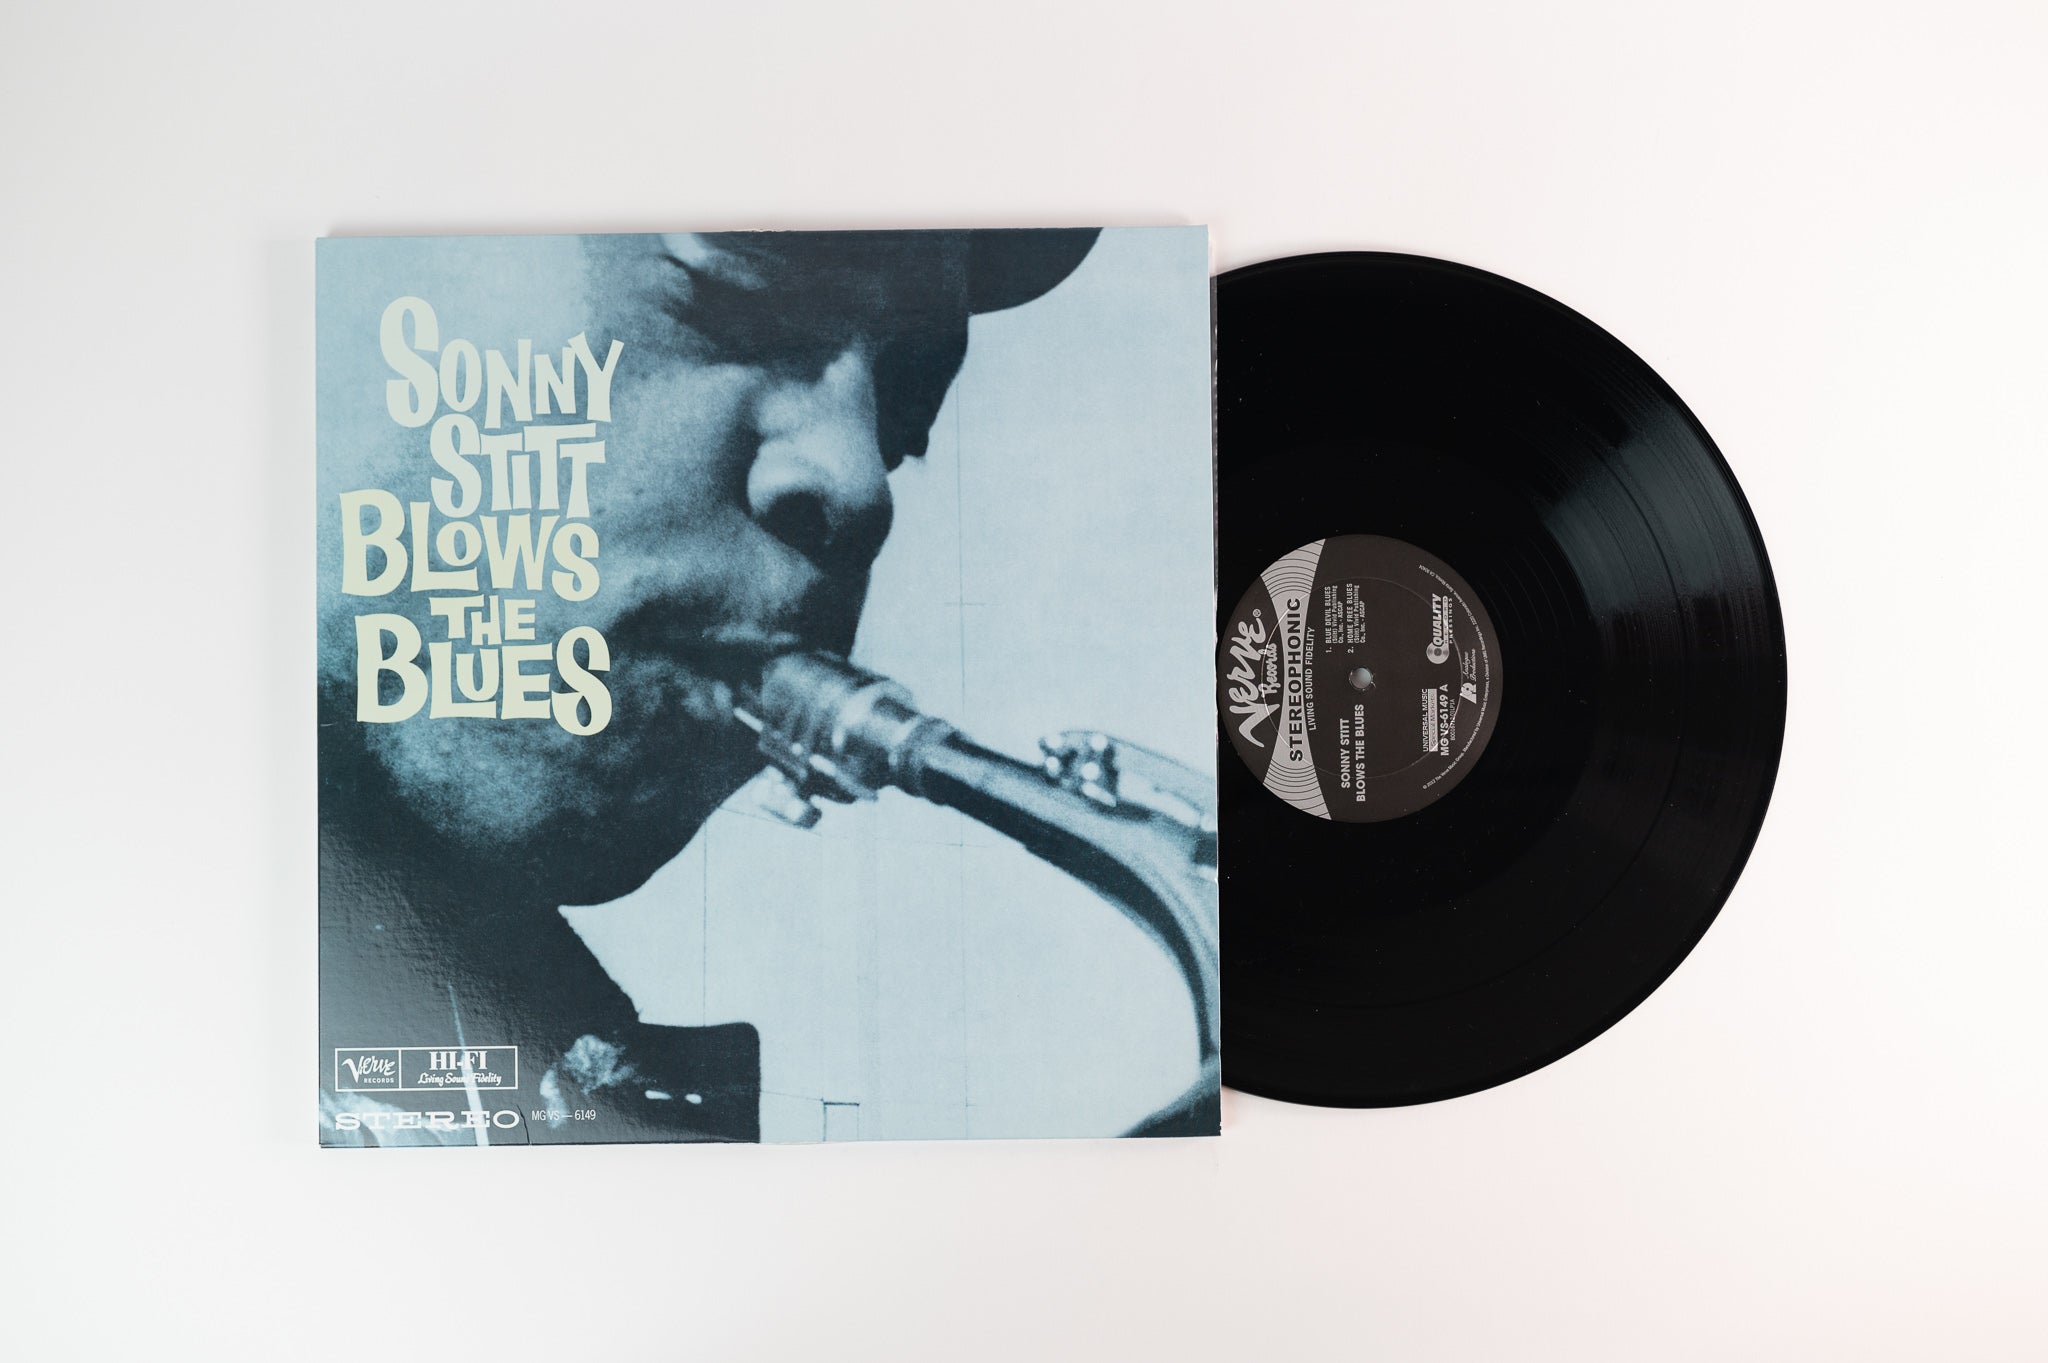 Sonny Stitt - Blows The Blues on Verve Analog Productions Reissue